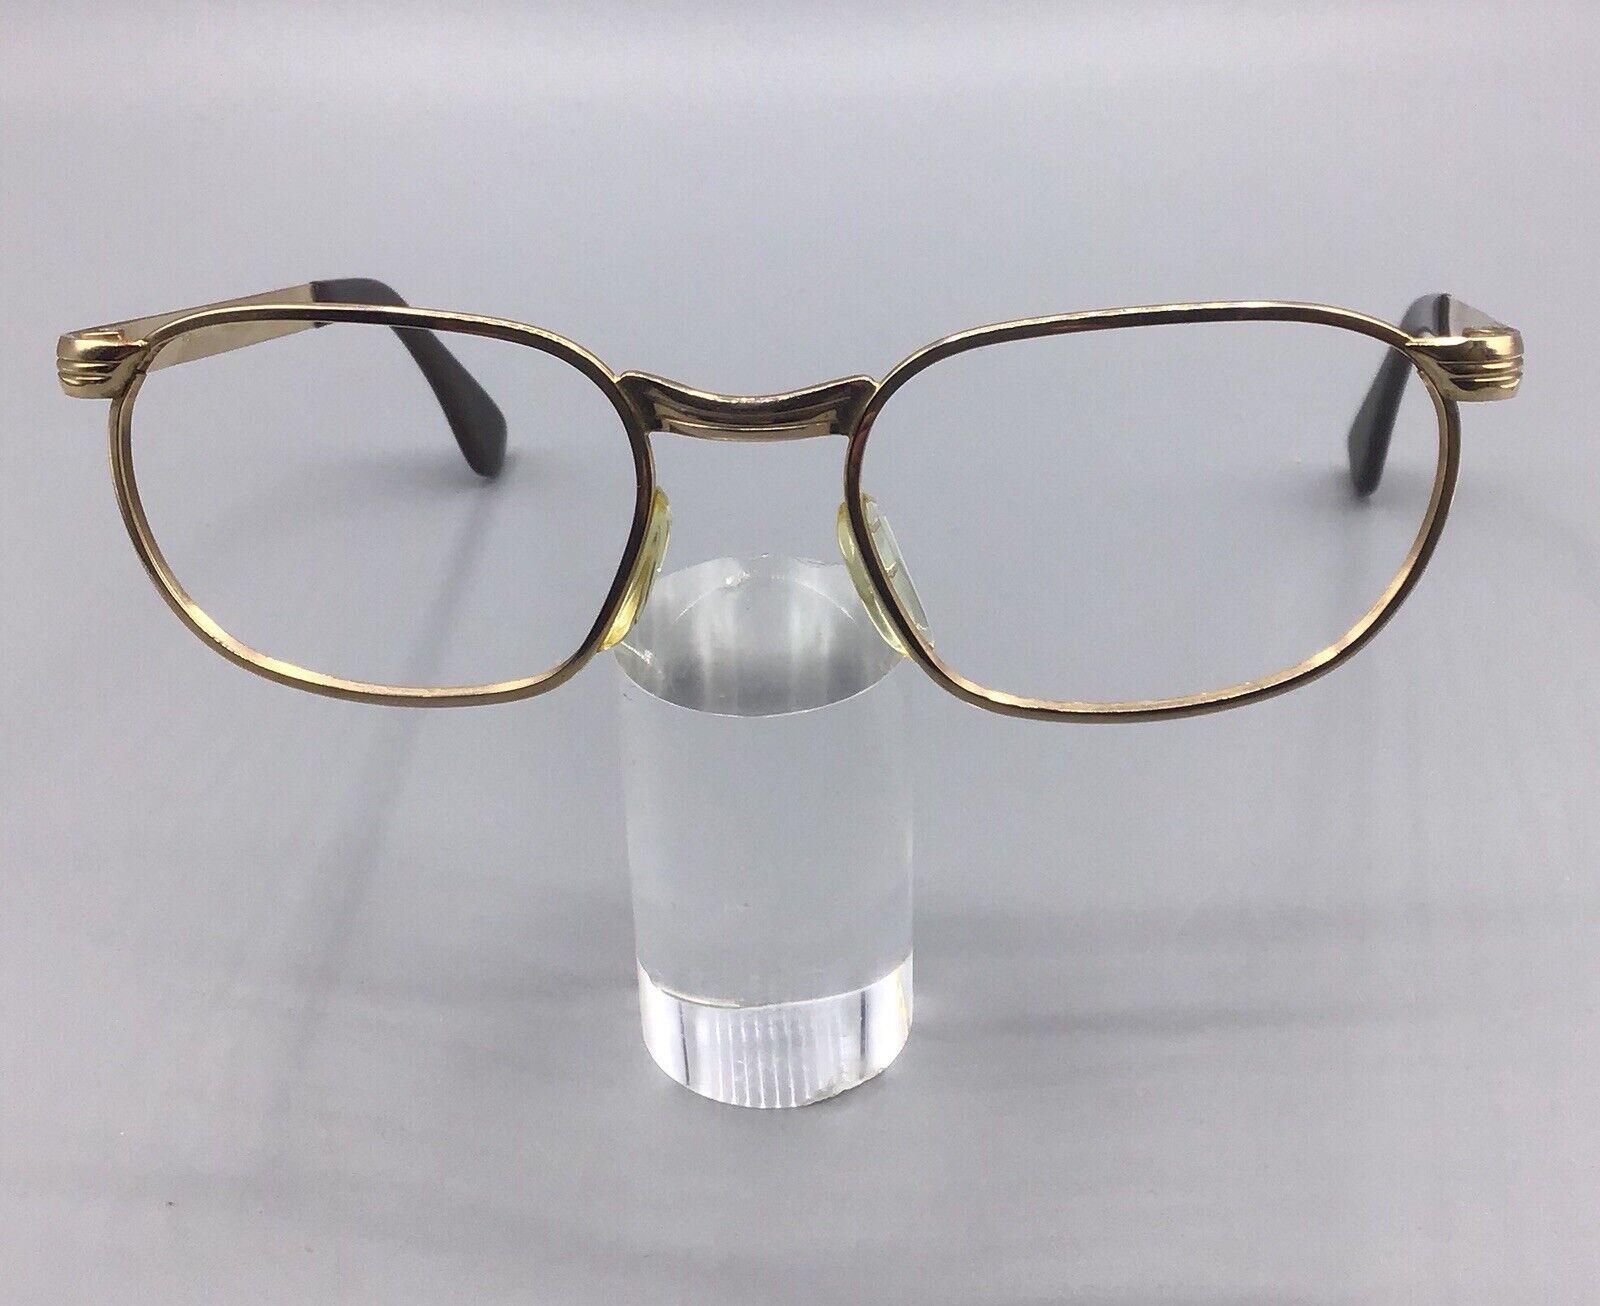 Marwitz occhiale vintage eyewear frame canador gold laminated oro